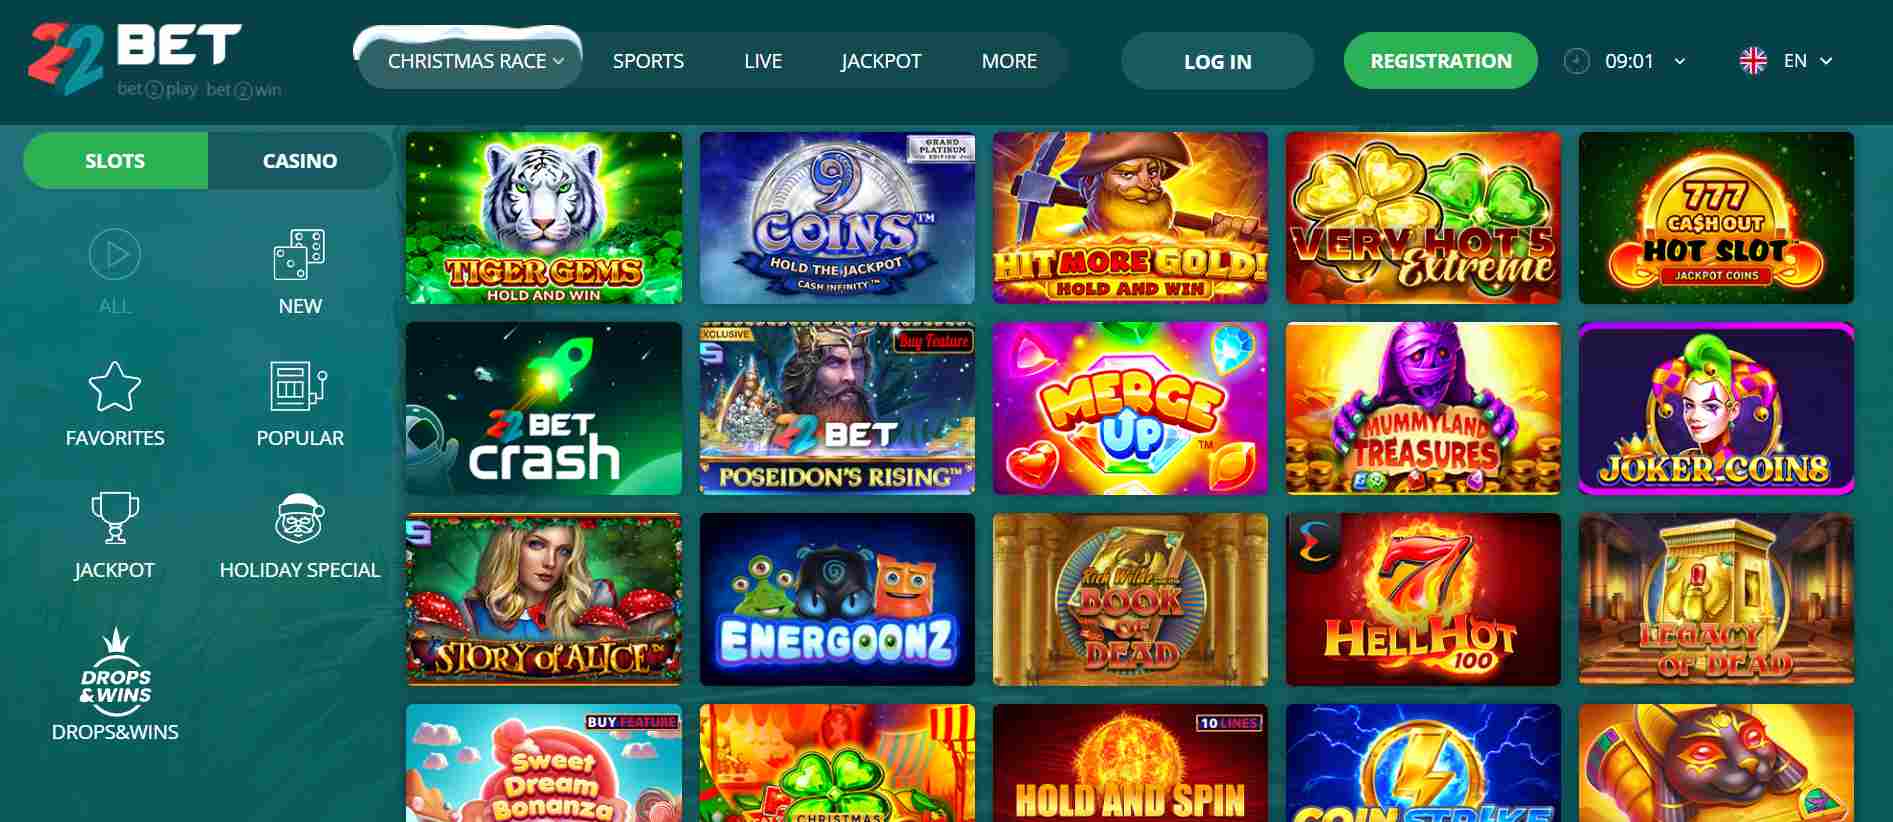 Casino games 22bet Bangladesh